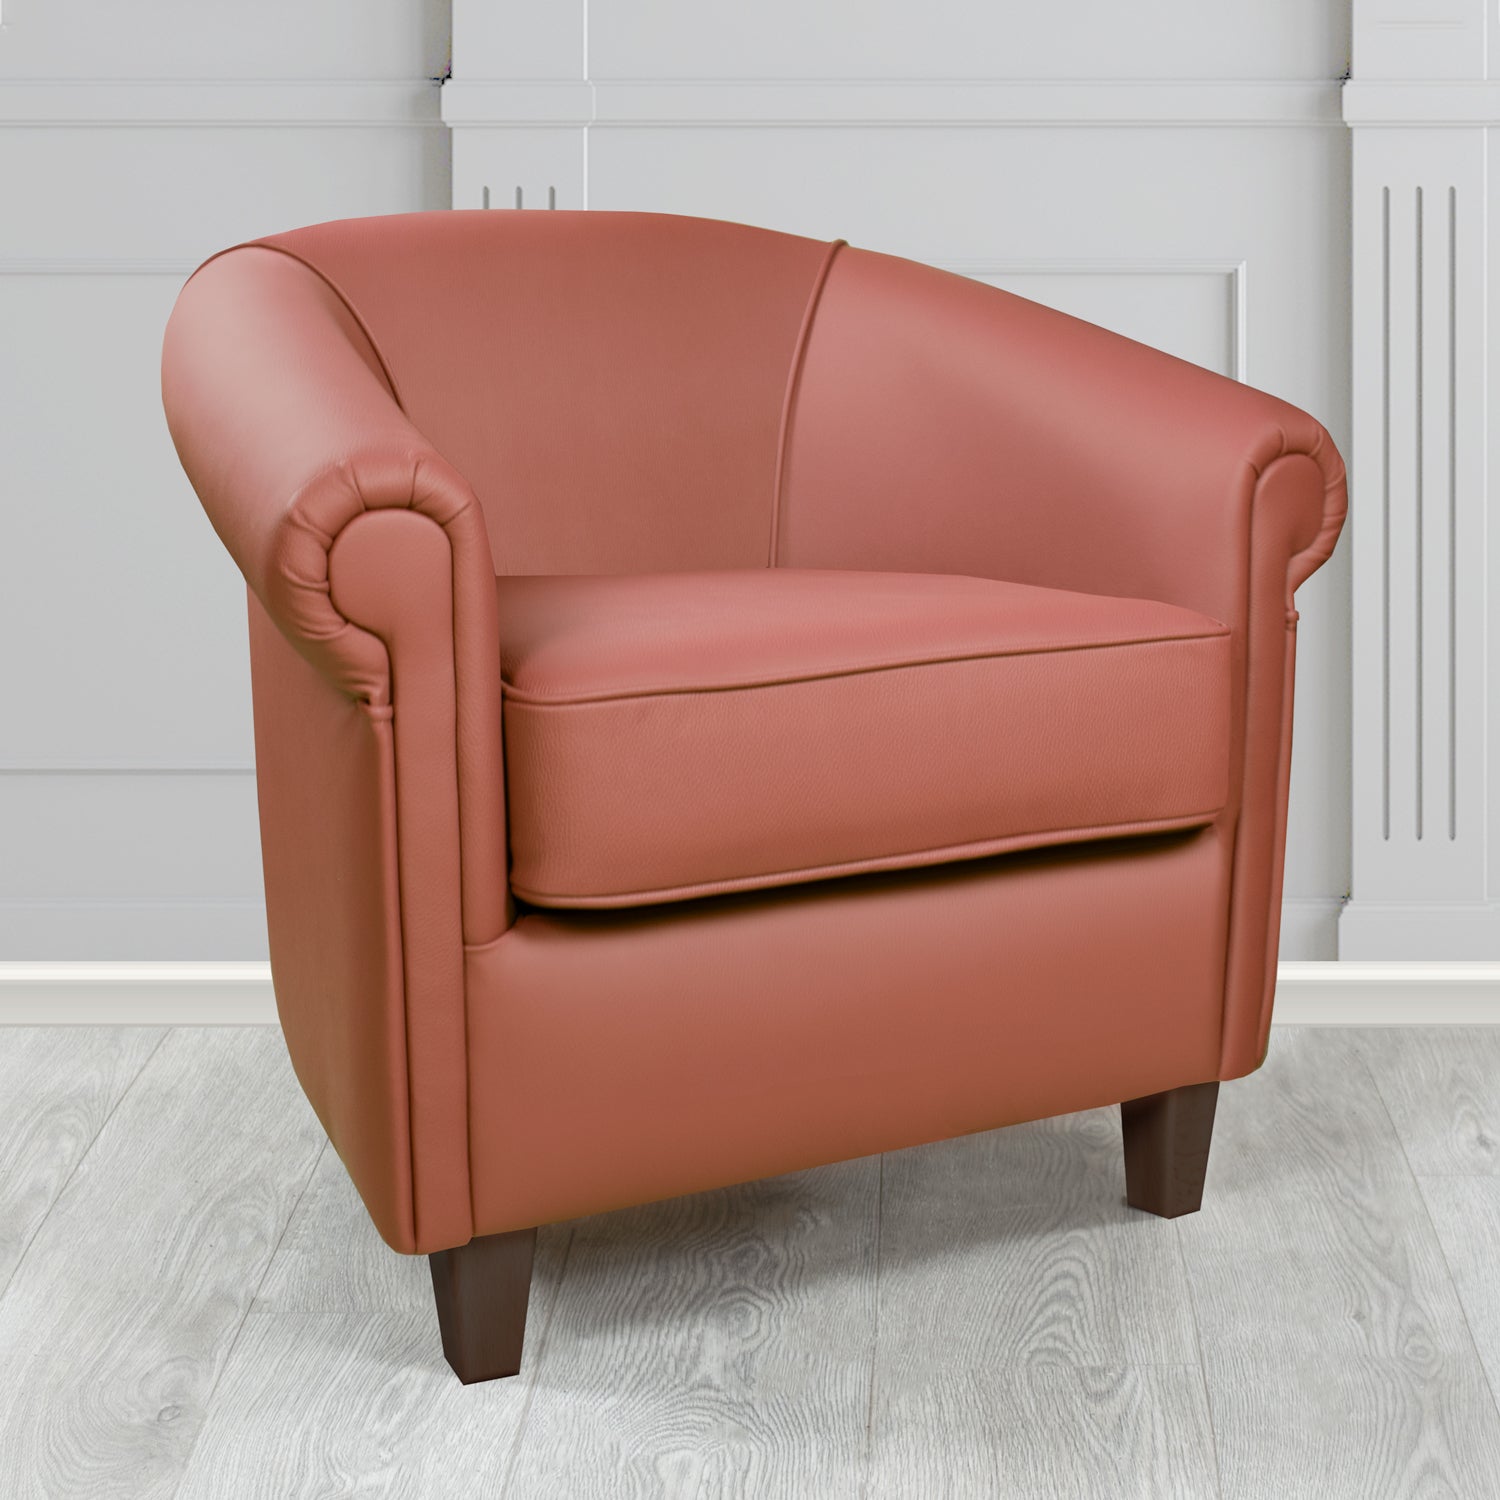 Siena Tub Chair in Crib 5 Shelly Wood Burner Genuine Leather - The Tub Chair Shop